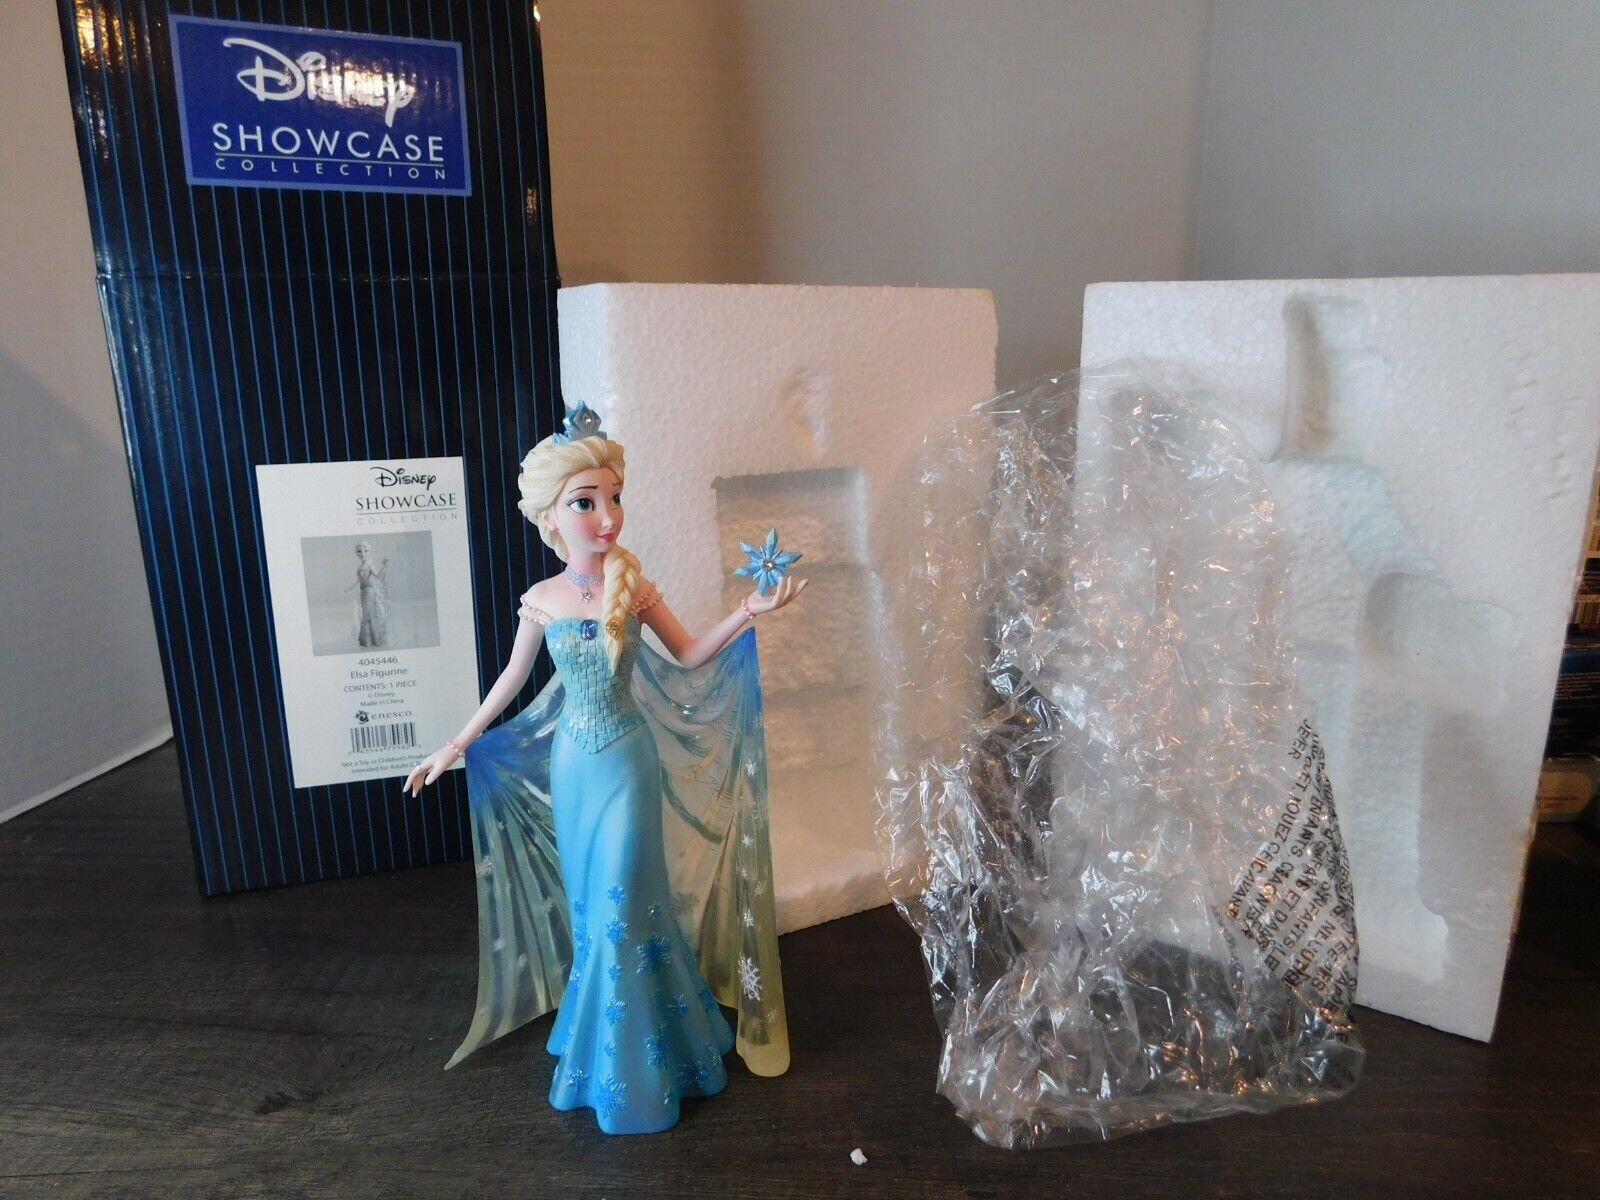 Disney Showcase Collection Frozen Elsa Figurine #4045446 by Enesco with Box